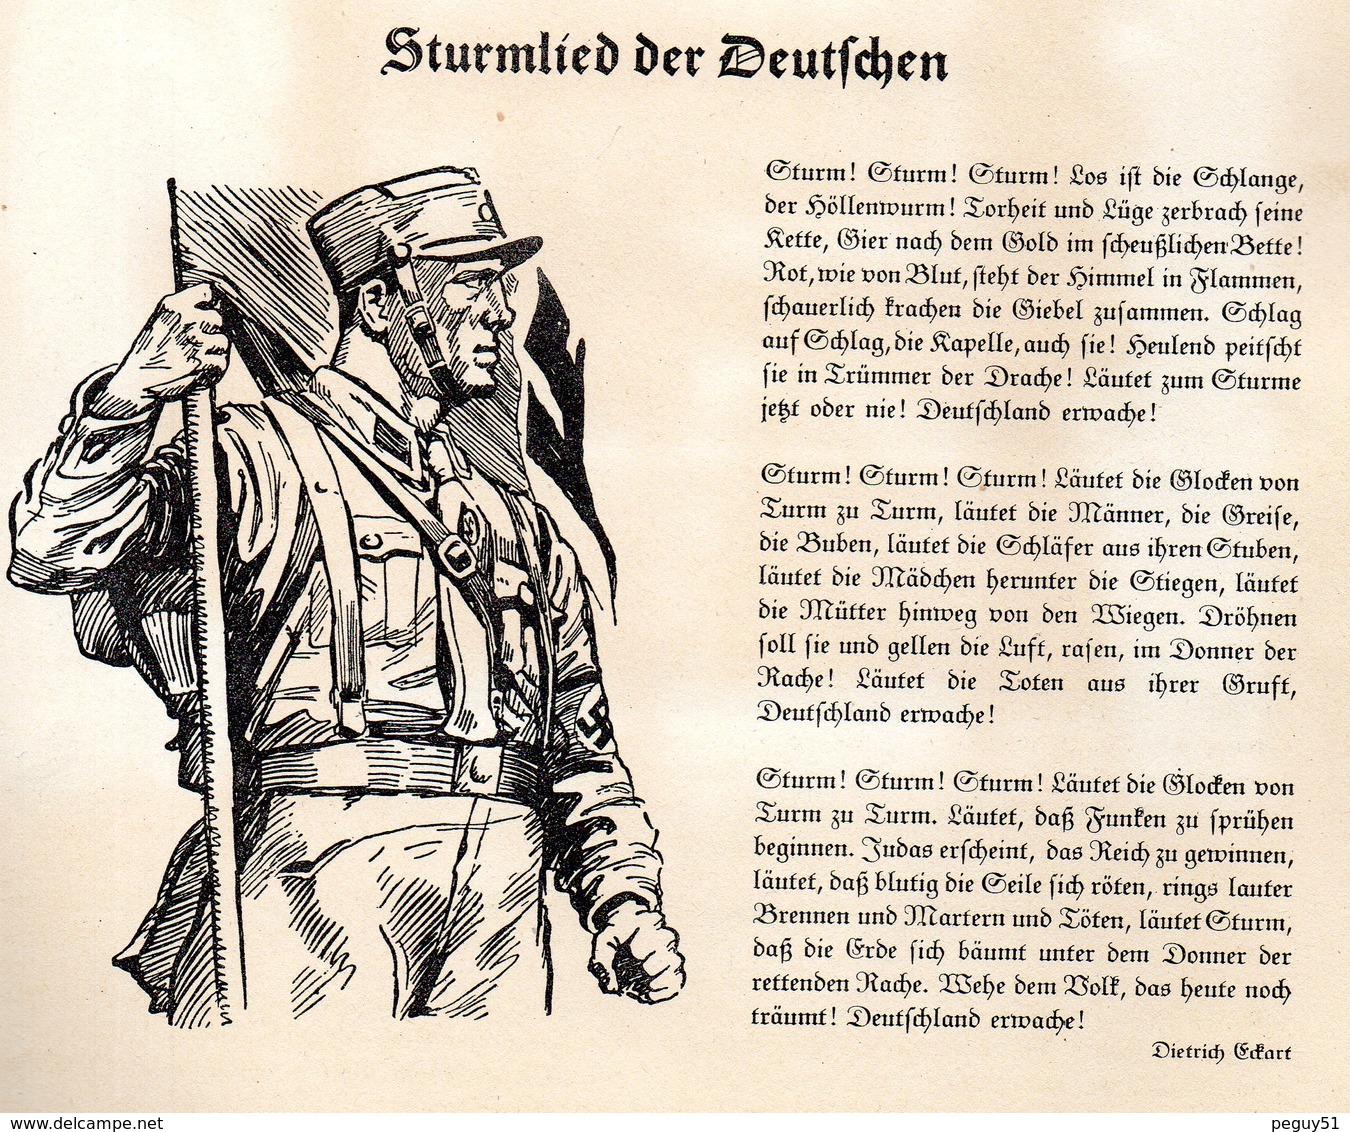 Deutschland erwacht. Histoire illustrée du NSDAP de 1920 à 1933. Cigaretten-Bilderdienst, Hamburg- Bahrenfeld 1933